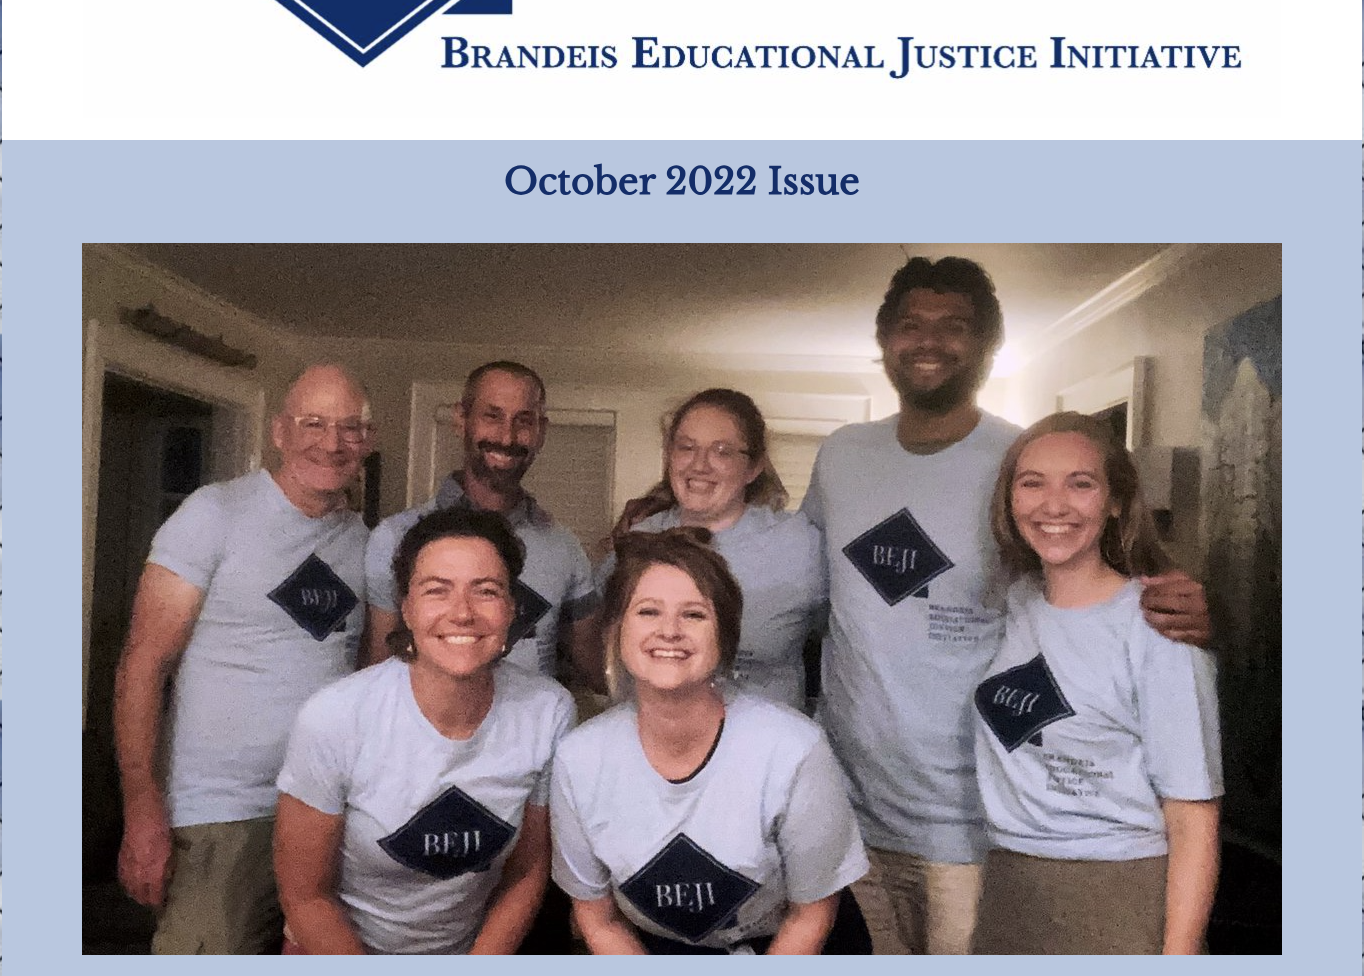 A screenshot from BEJI's October 2022 newsletter cover, showing the BEJI Brandeis team.